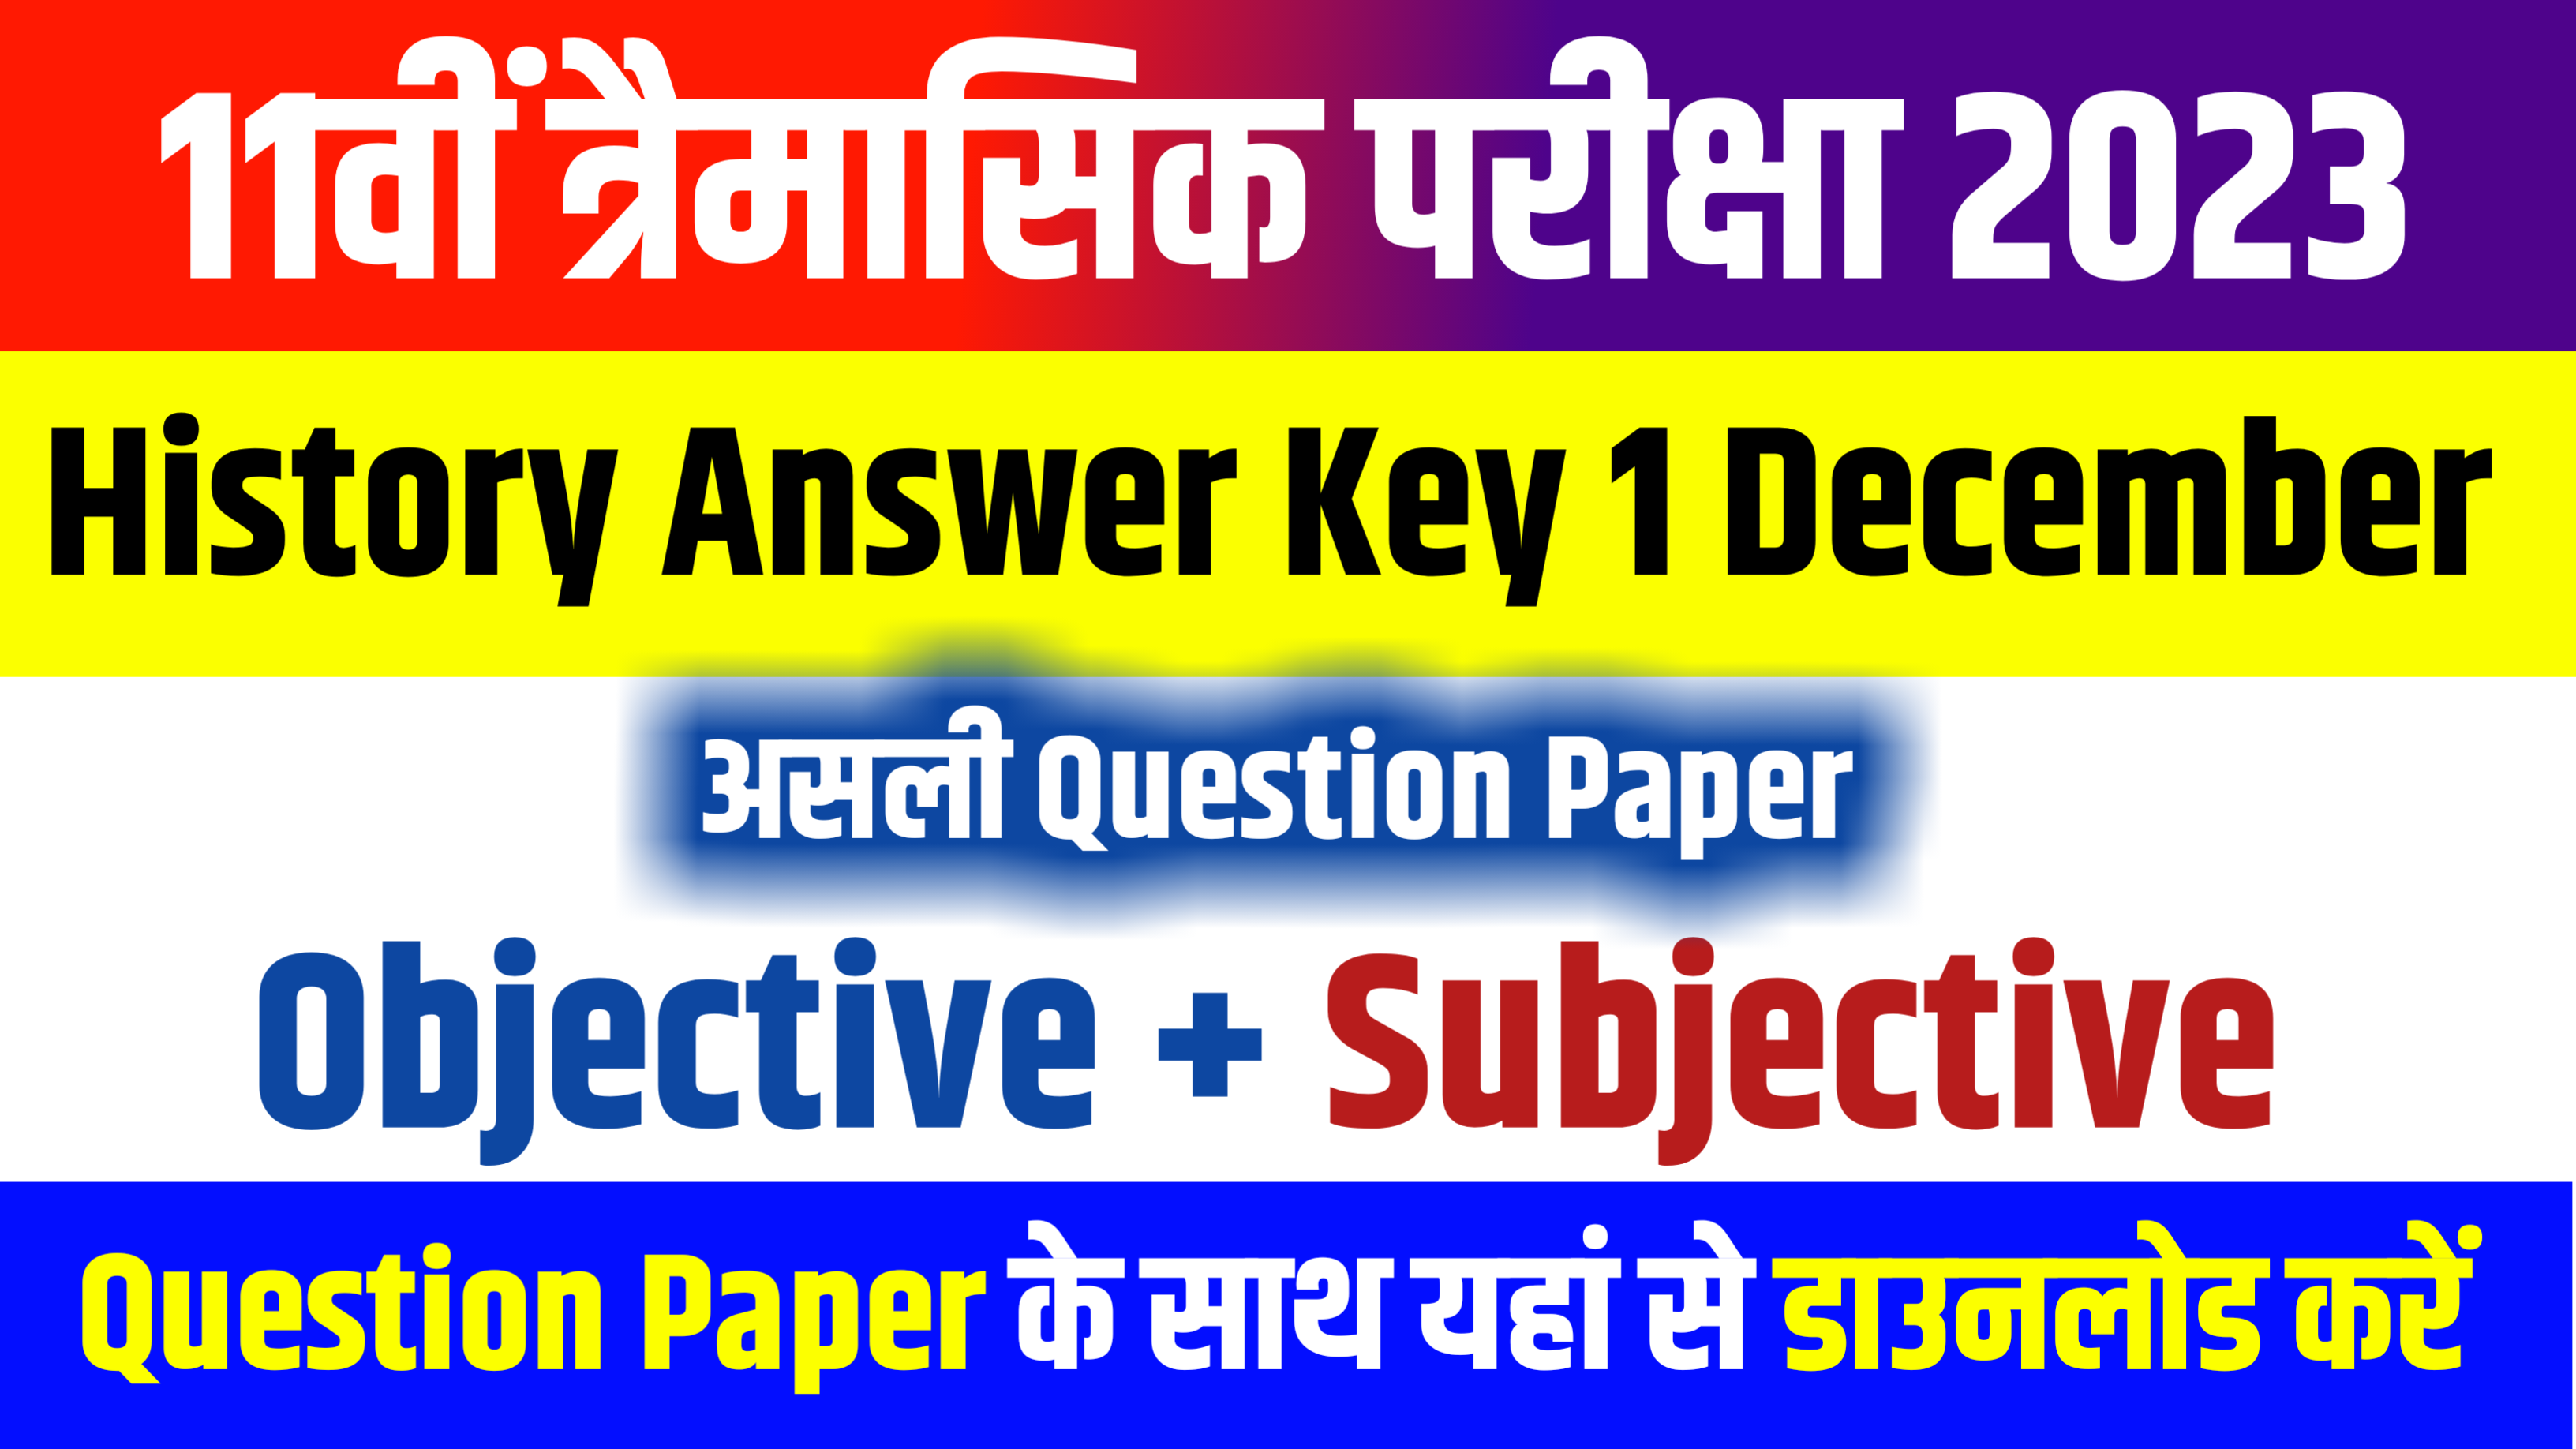 11th History 1 December Answer Key: